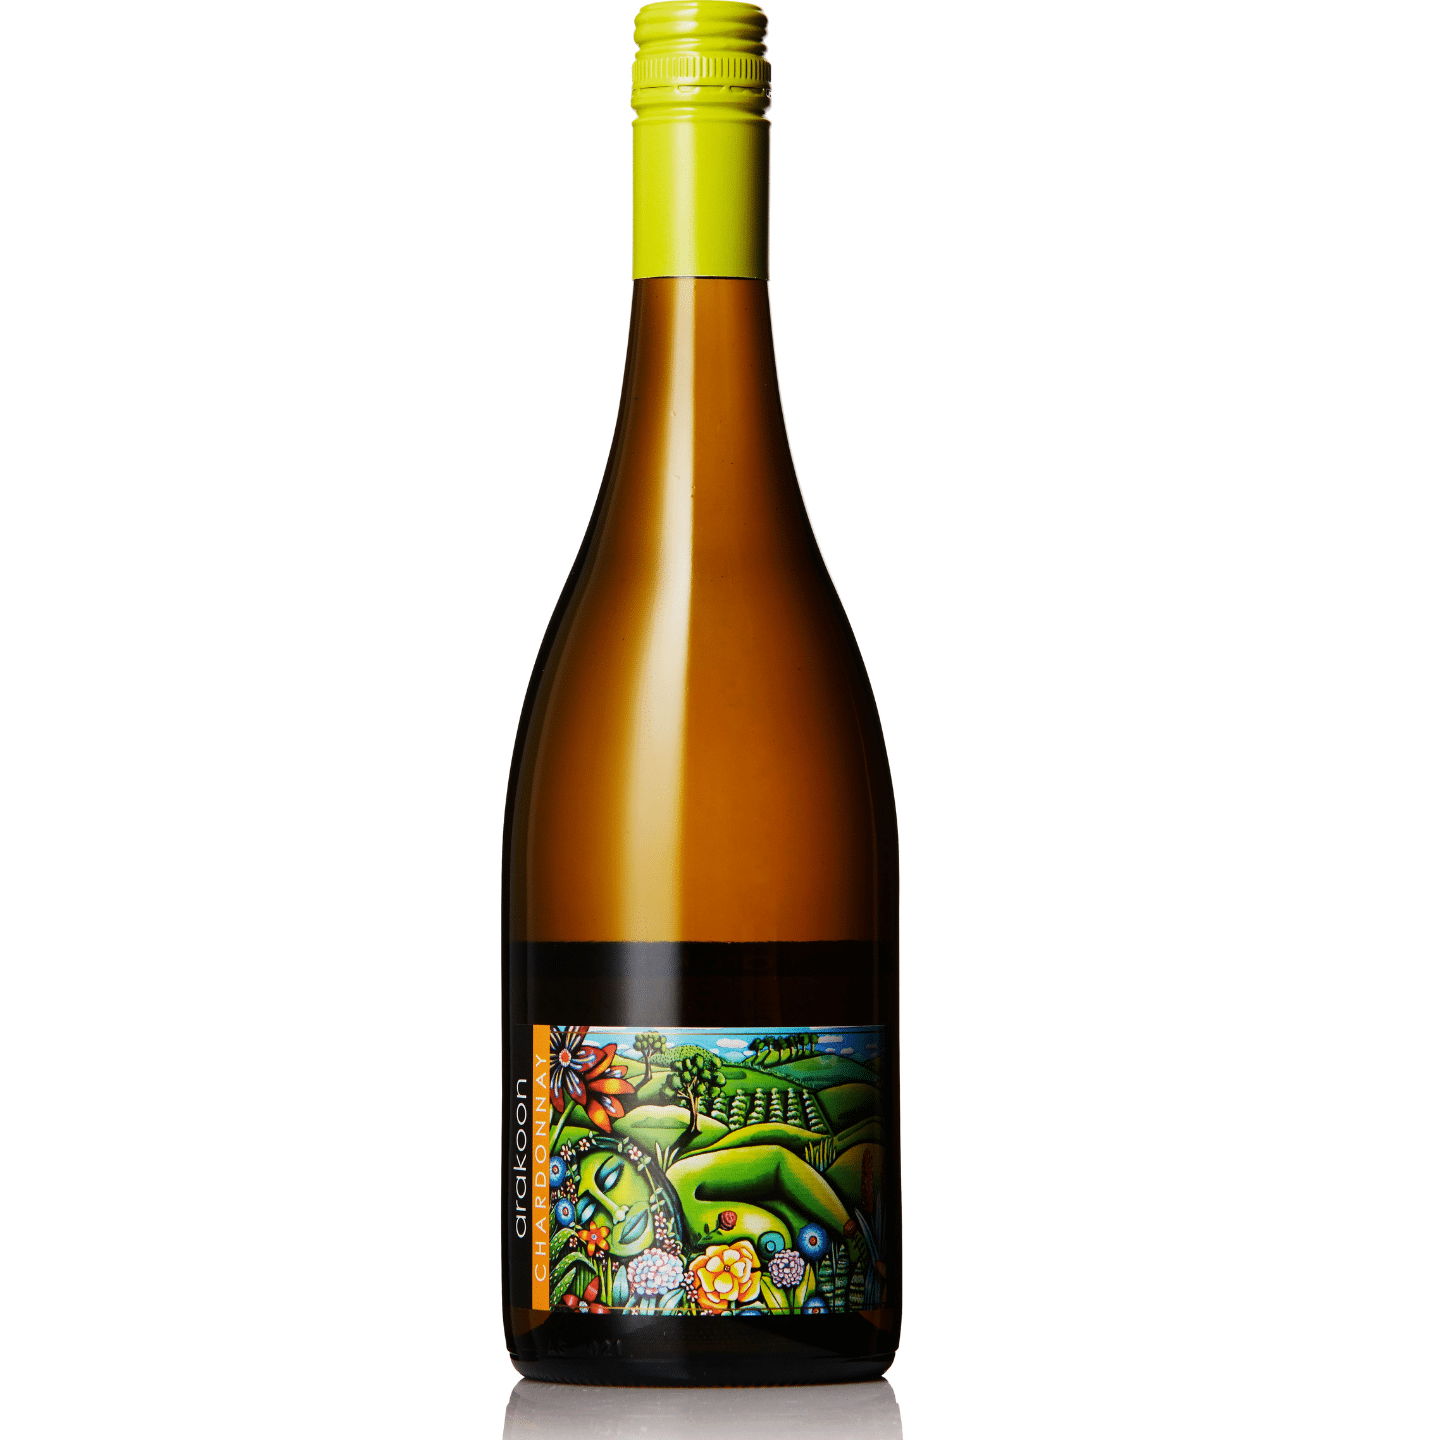 Arakoon Wines Chardonnay 2016